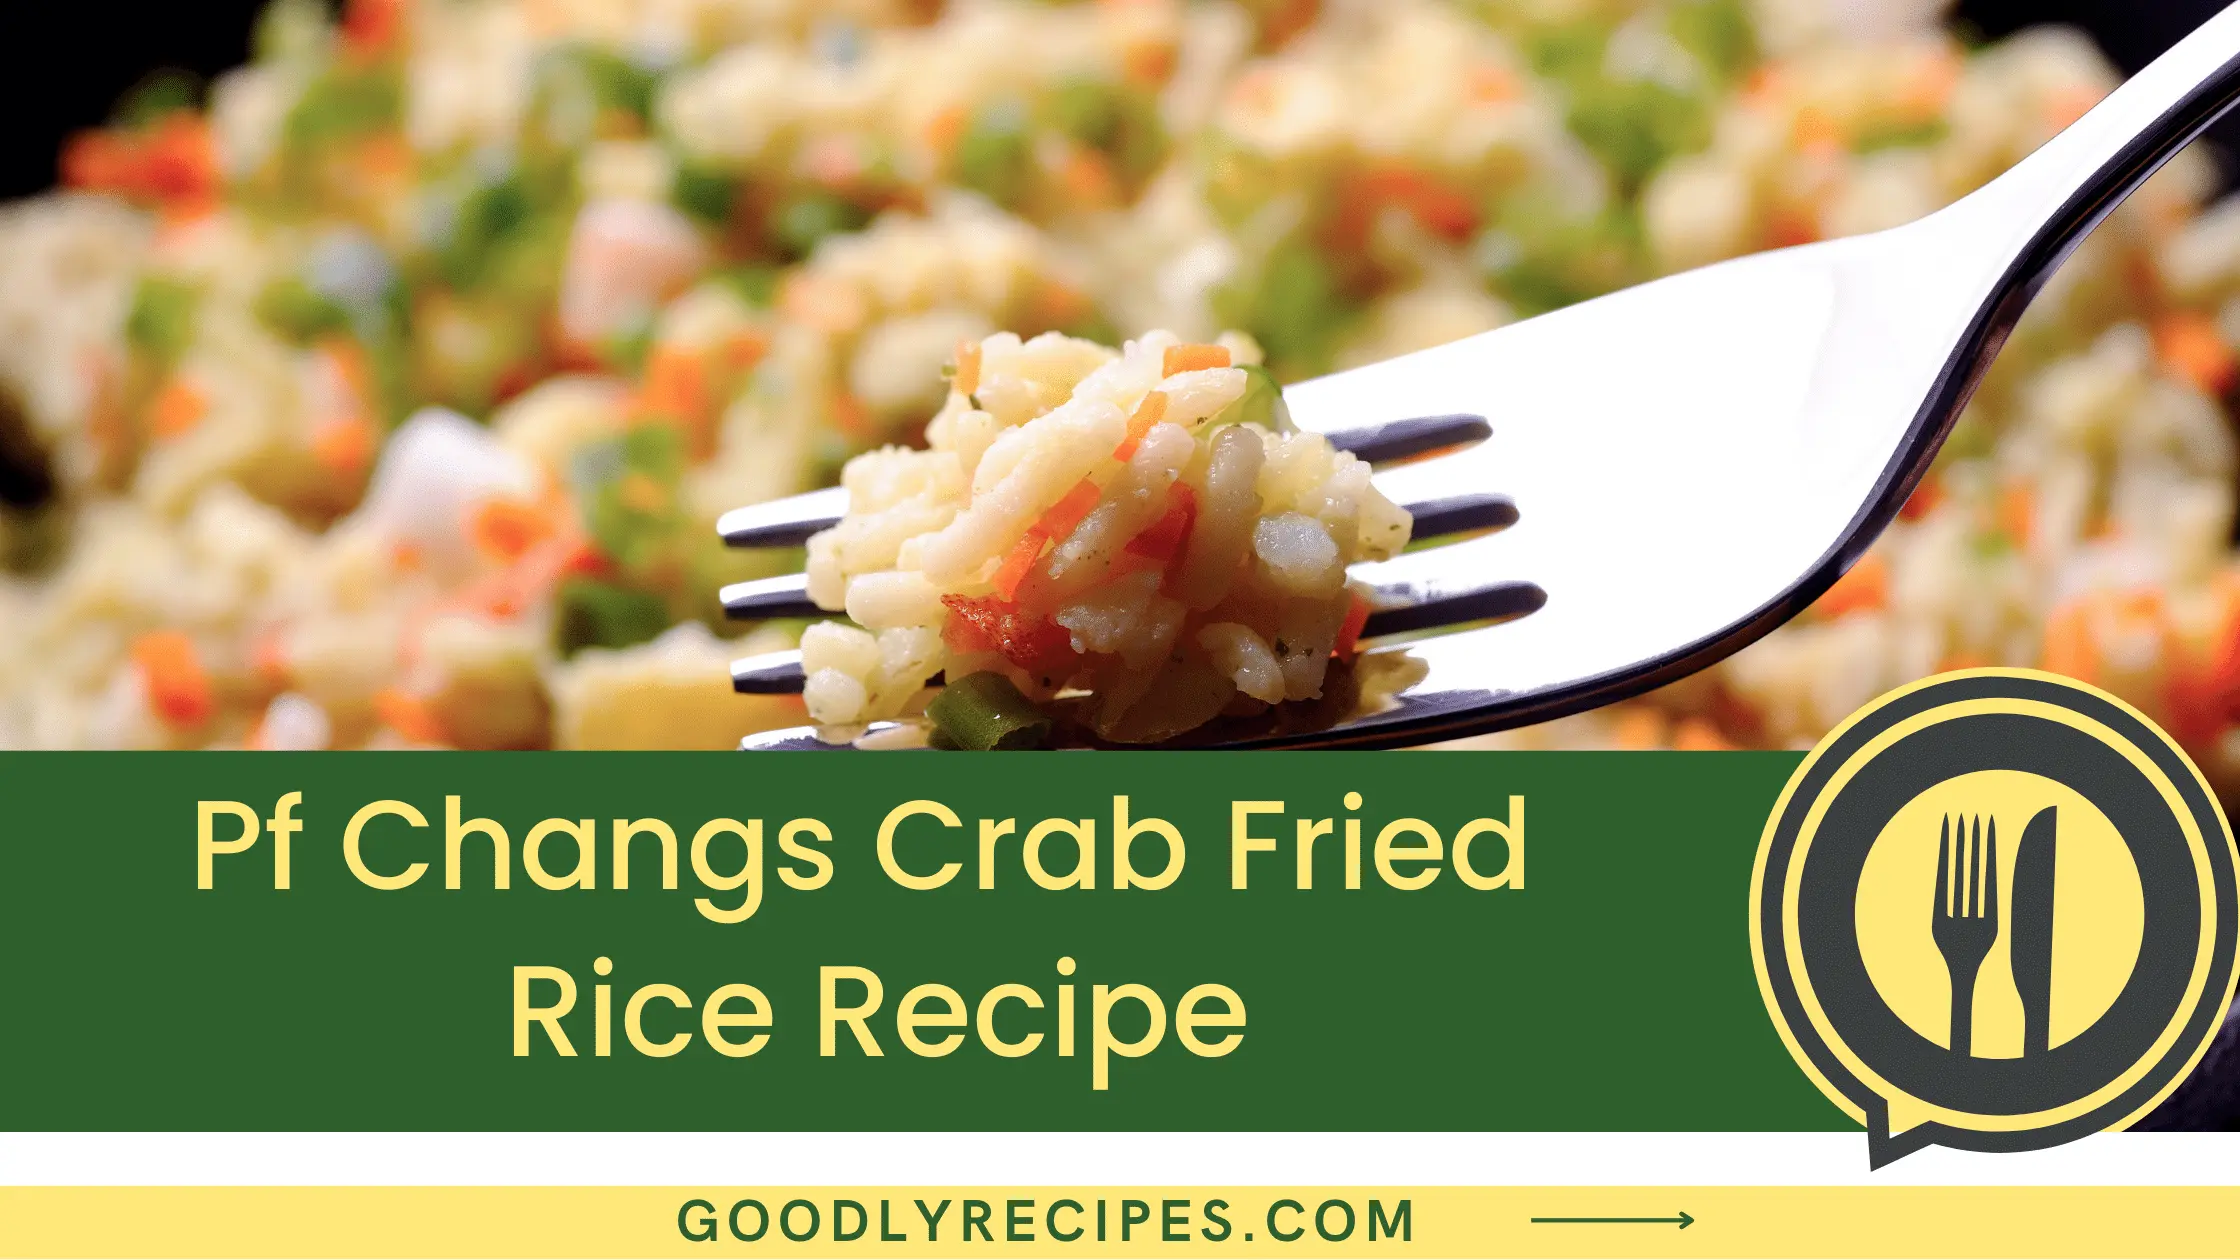 Pf Changs Crab Fried Rice Recipe